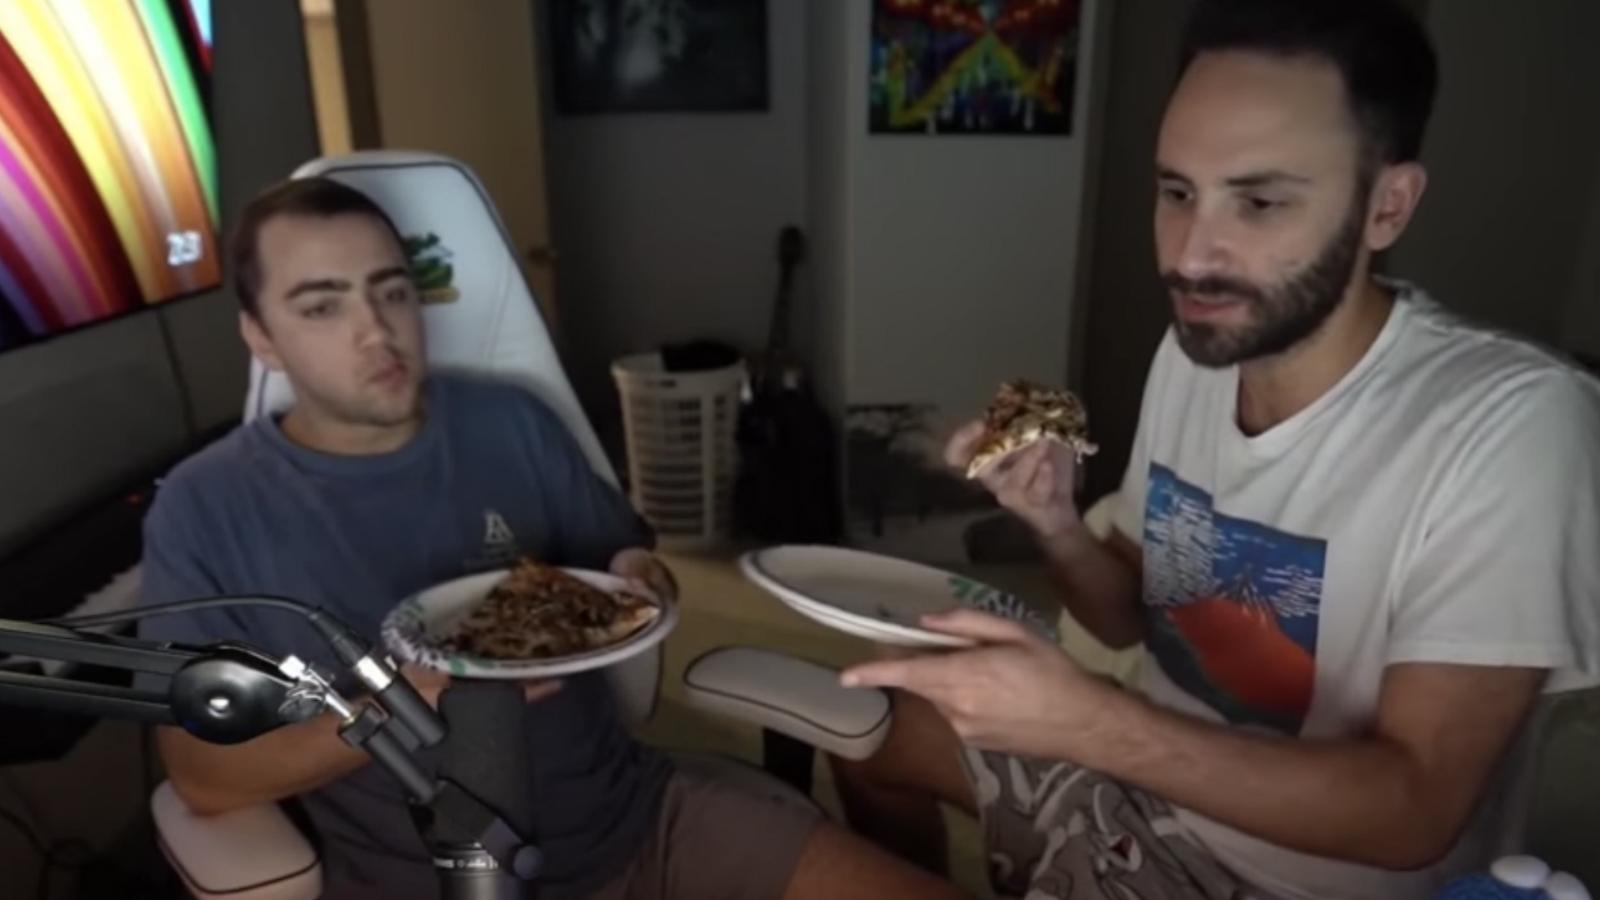 streamers Mizkif and Reckful eating pizza on stream